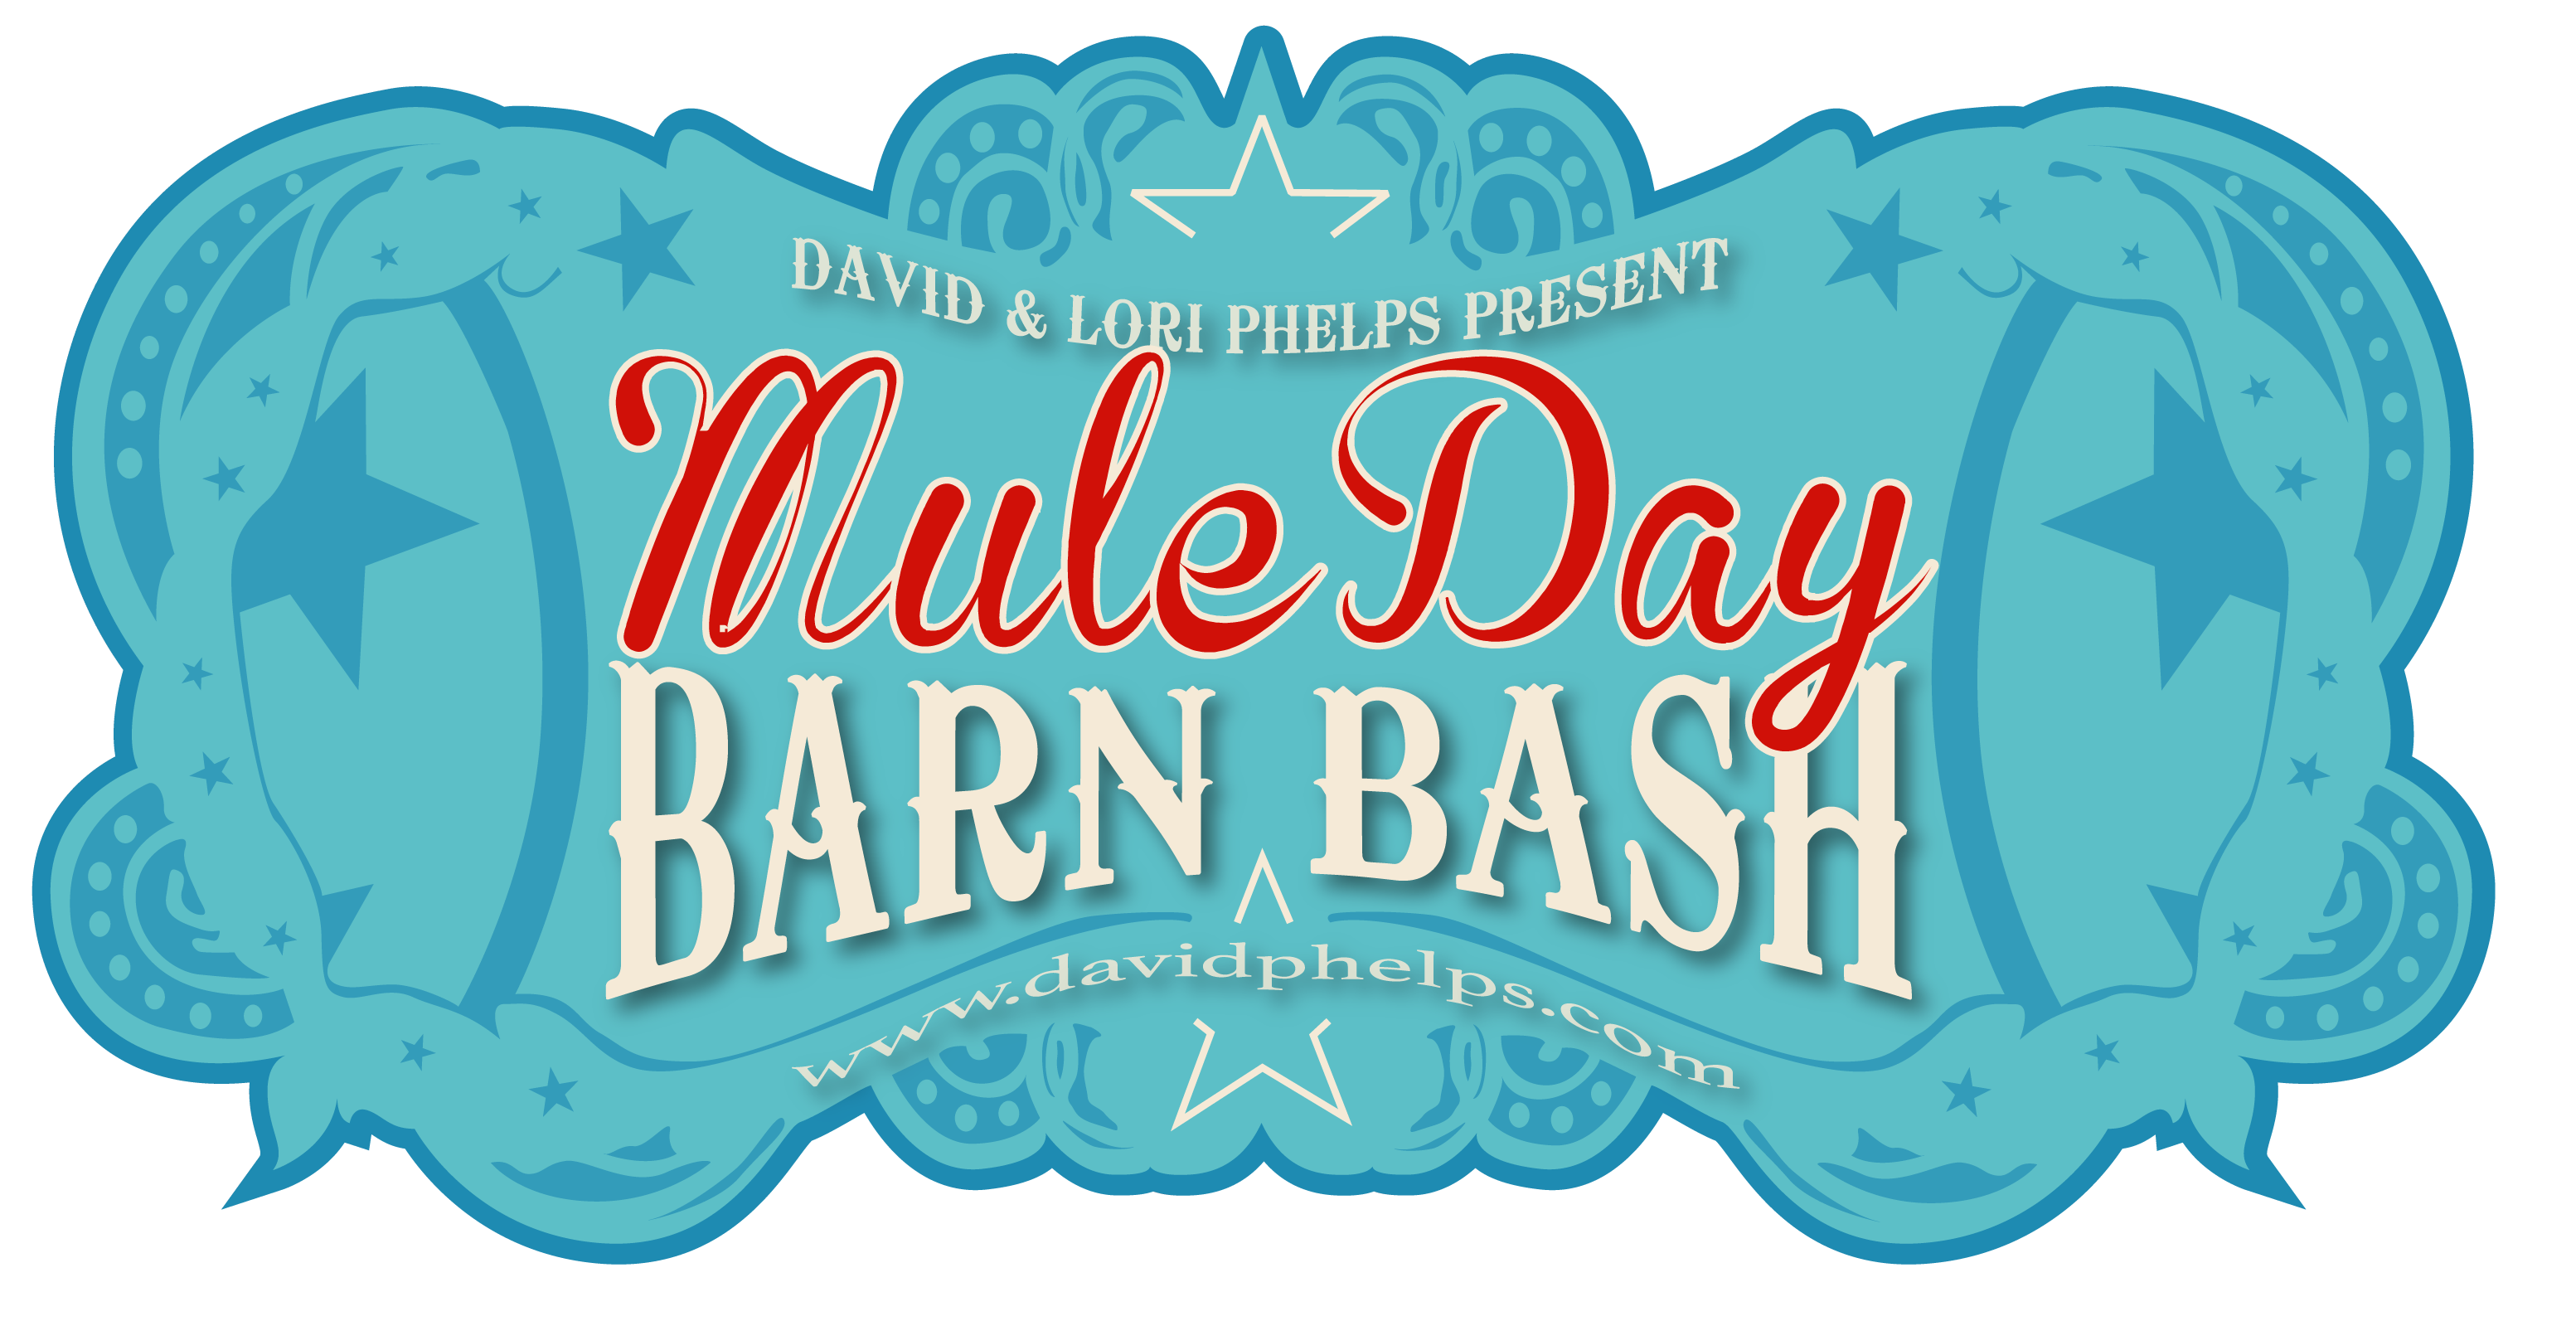 Mule Day Barn Bash: A Spectacular Americana Celebration!